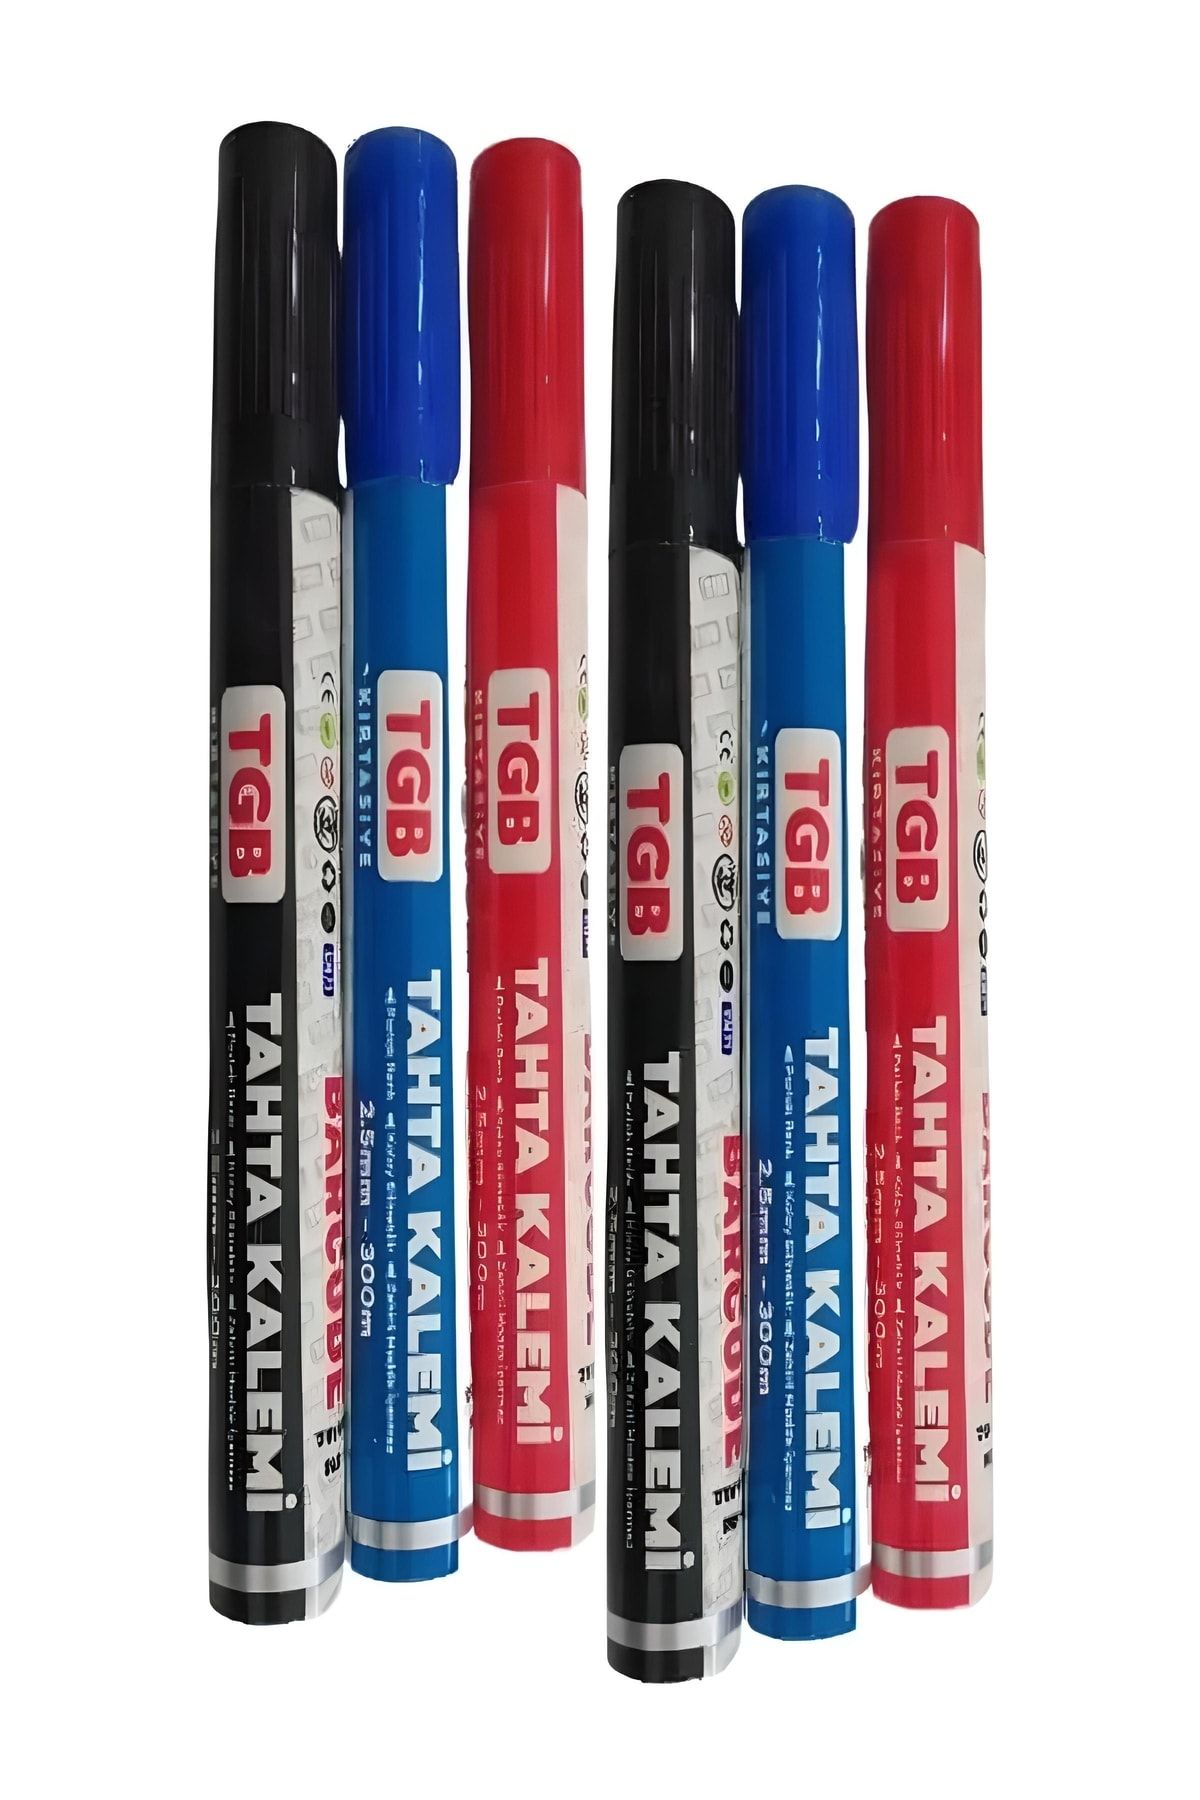 TGB Beyaz Tahta Kalemi Öğretmen Kalemi Kartuşlu Tahta Kalemi Siyah-mavi-kırmızı Set 6 Adet